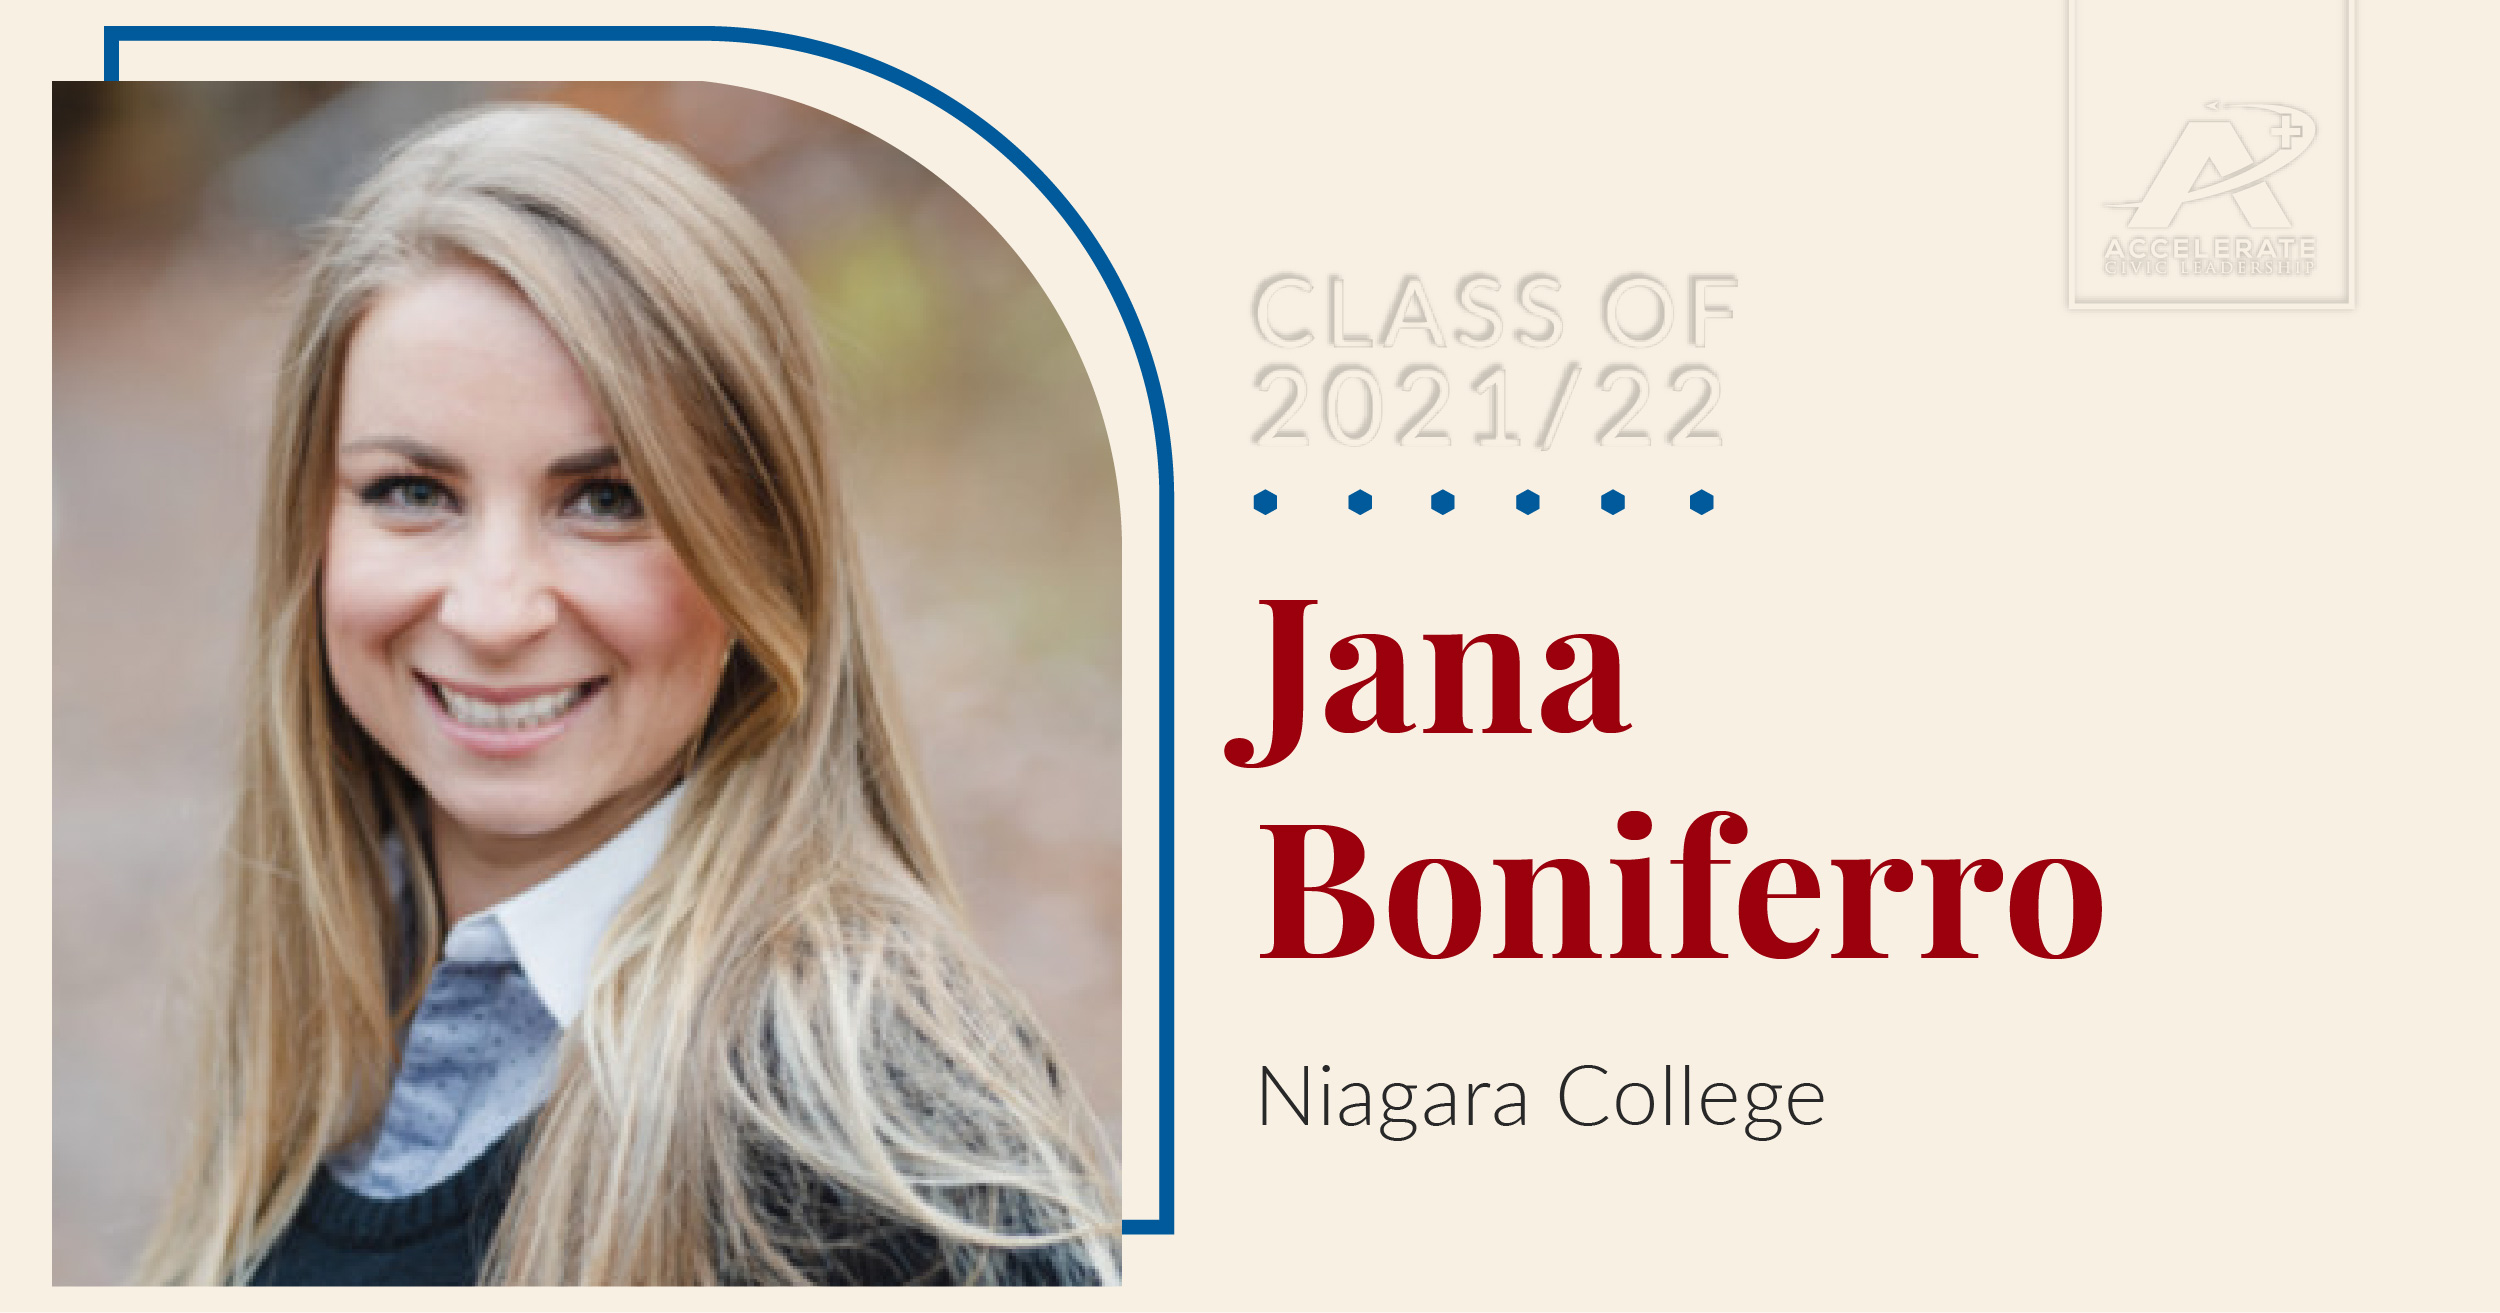 Leader spotlight image for Jana Boniferro, Alumni Engagement Officer, Niagara College